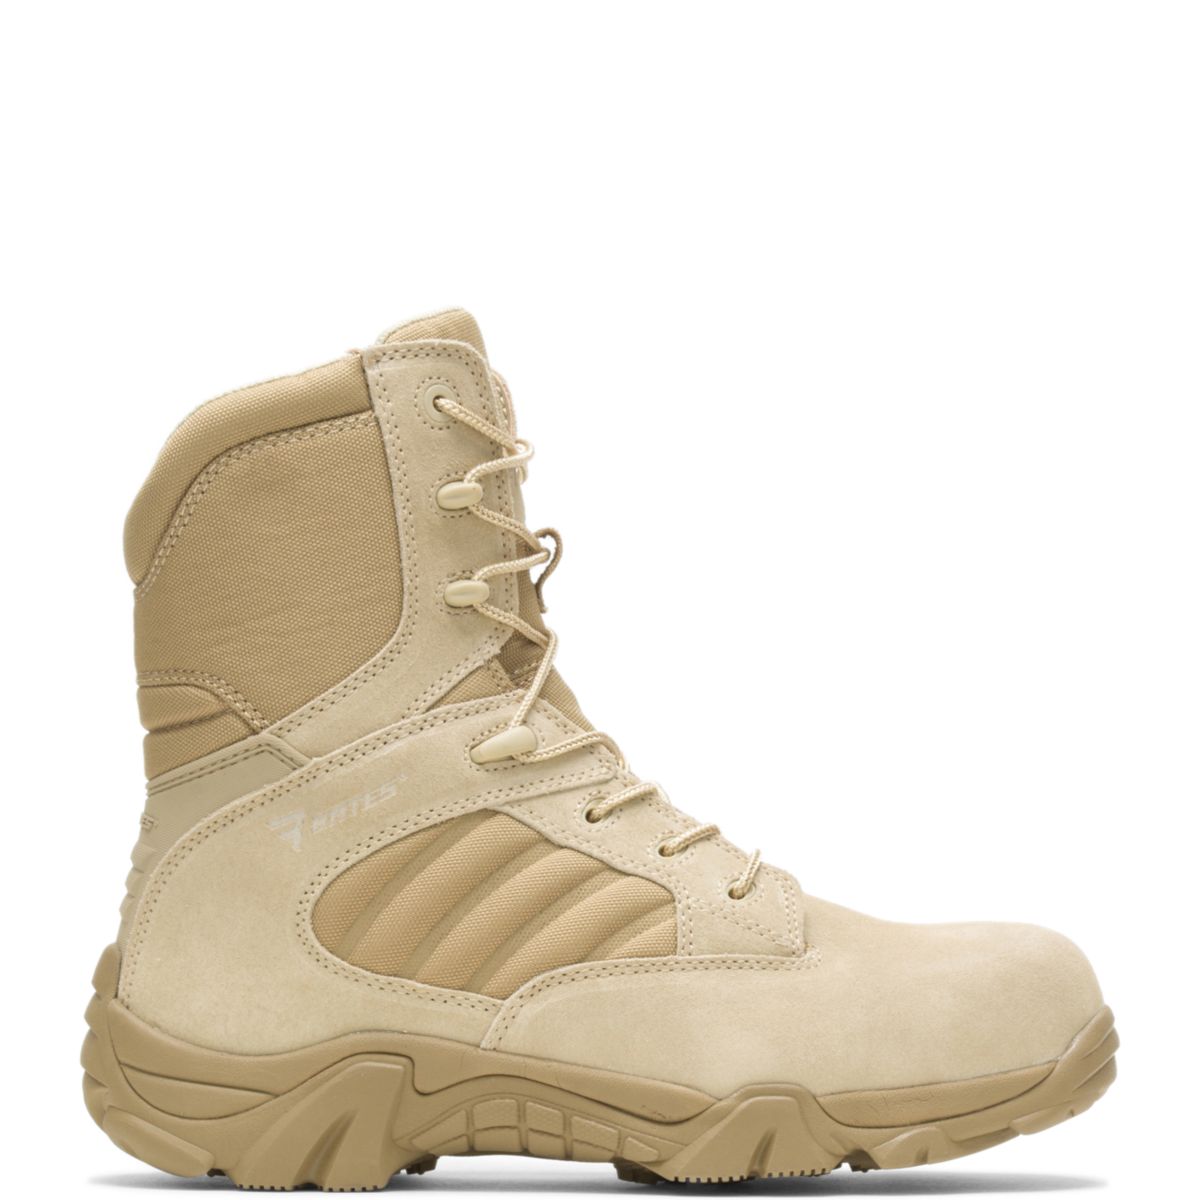 Bates Men's GX-8 Composite Toe Side-Zip Work Boot Desert Tan - E02276 - image 2 of 6